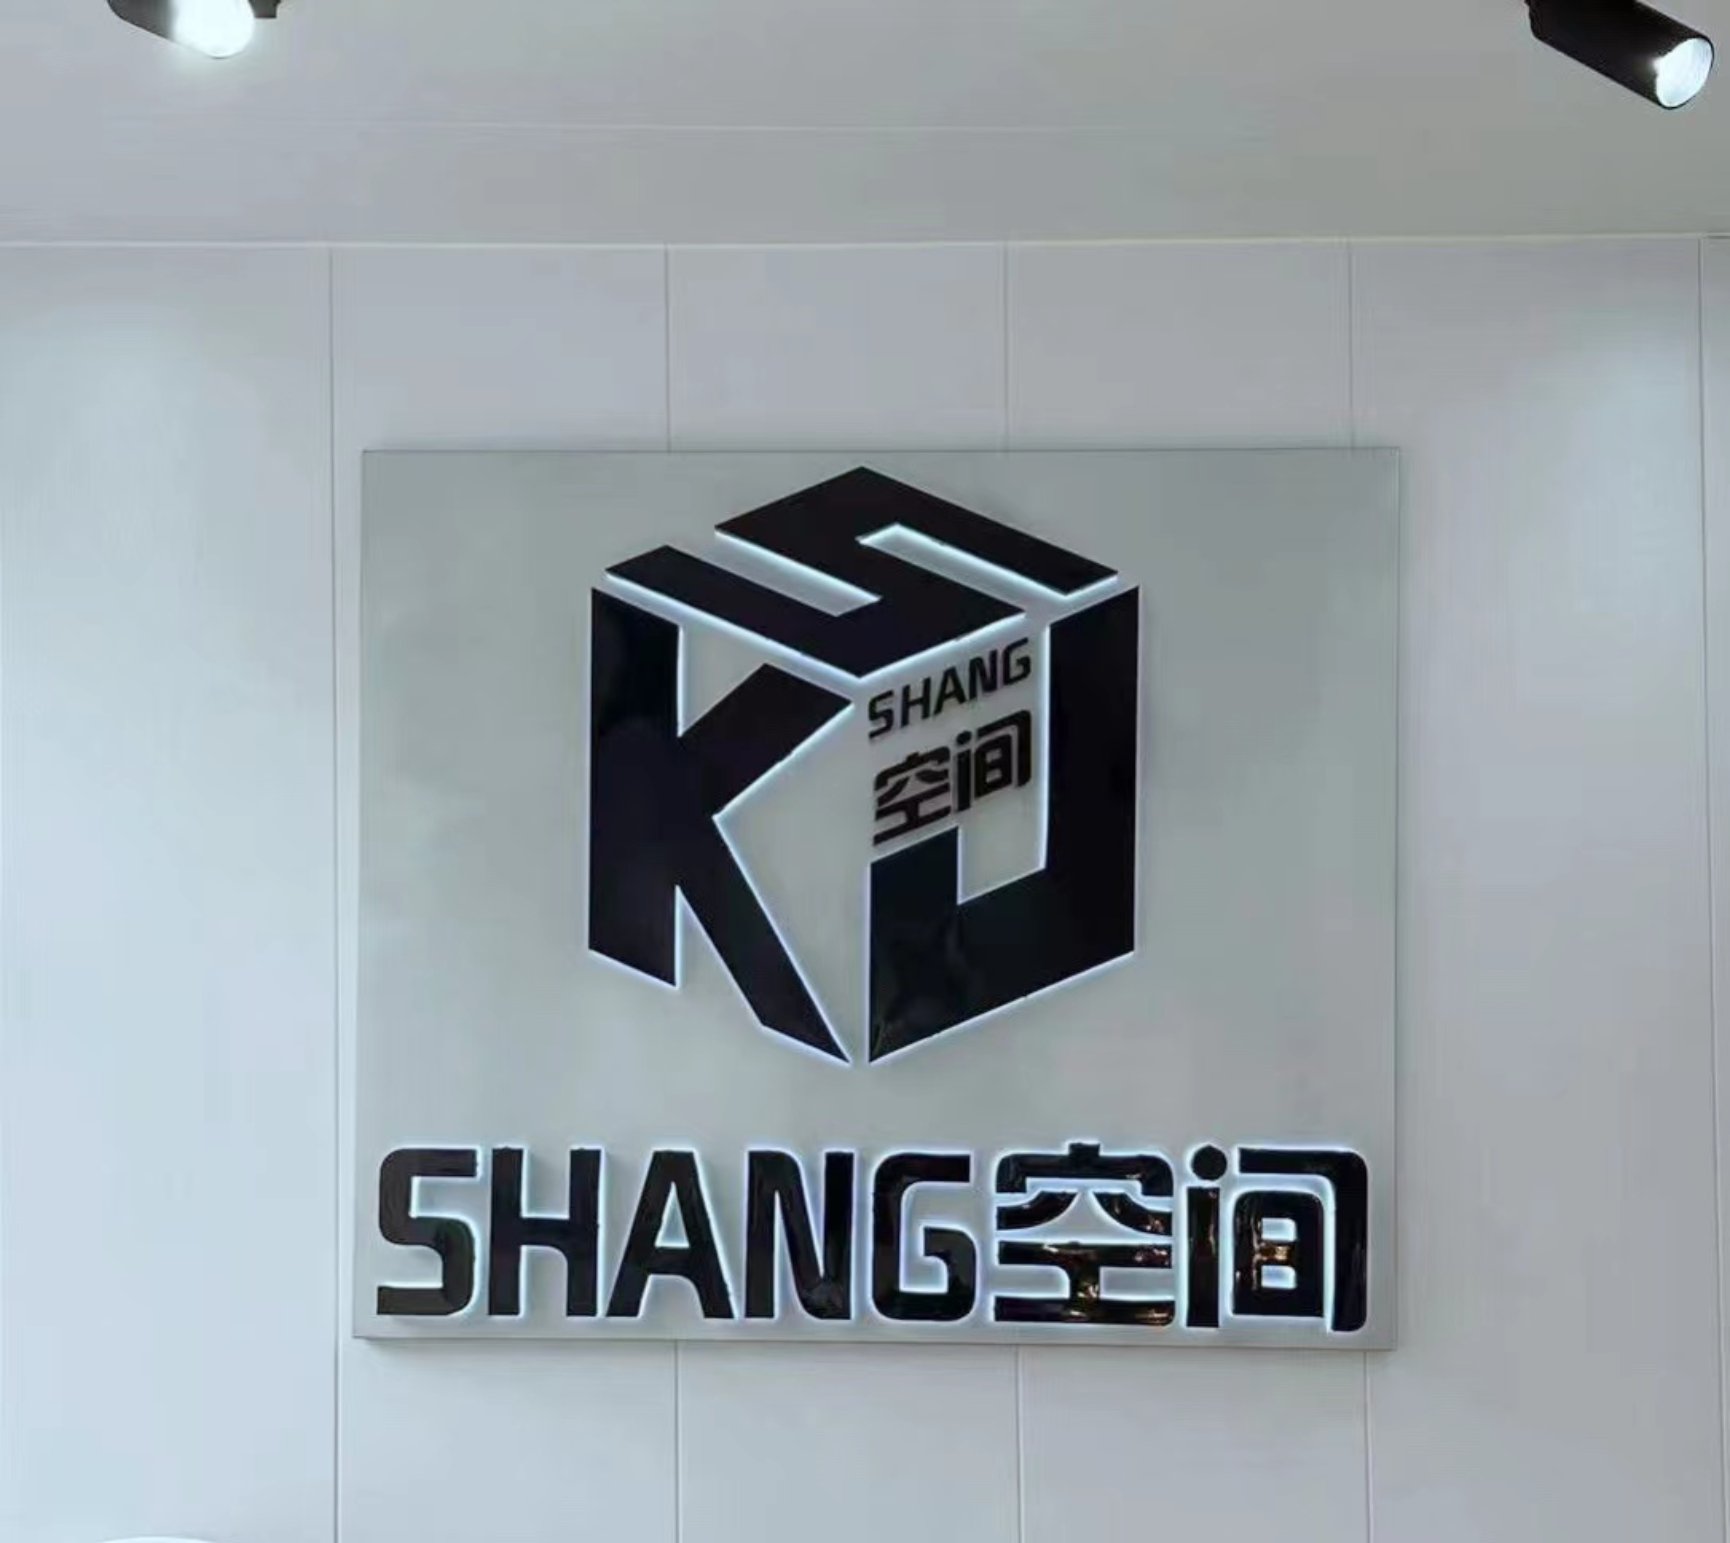 图为“SHANG空间”Logo